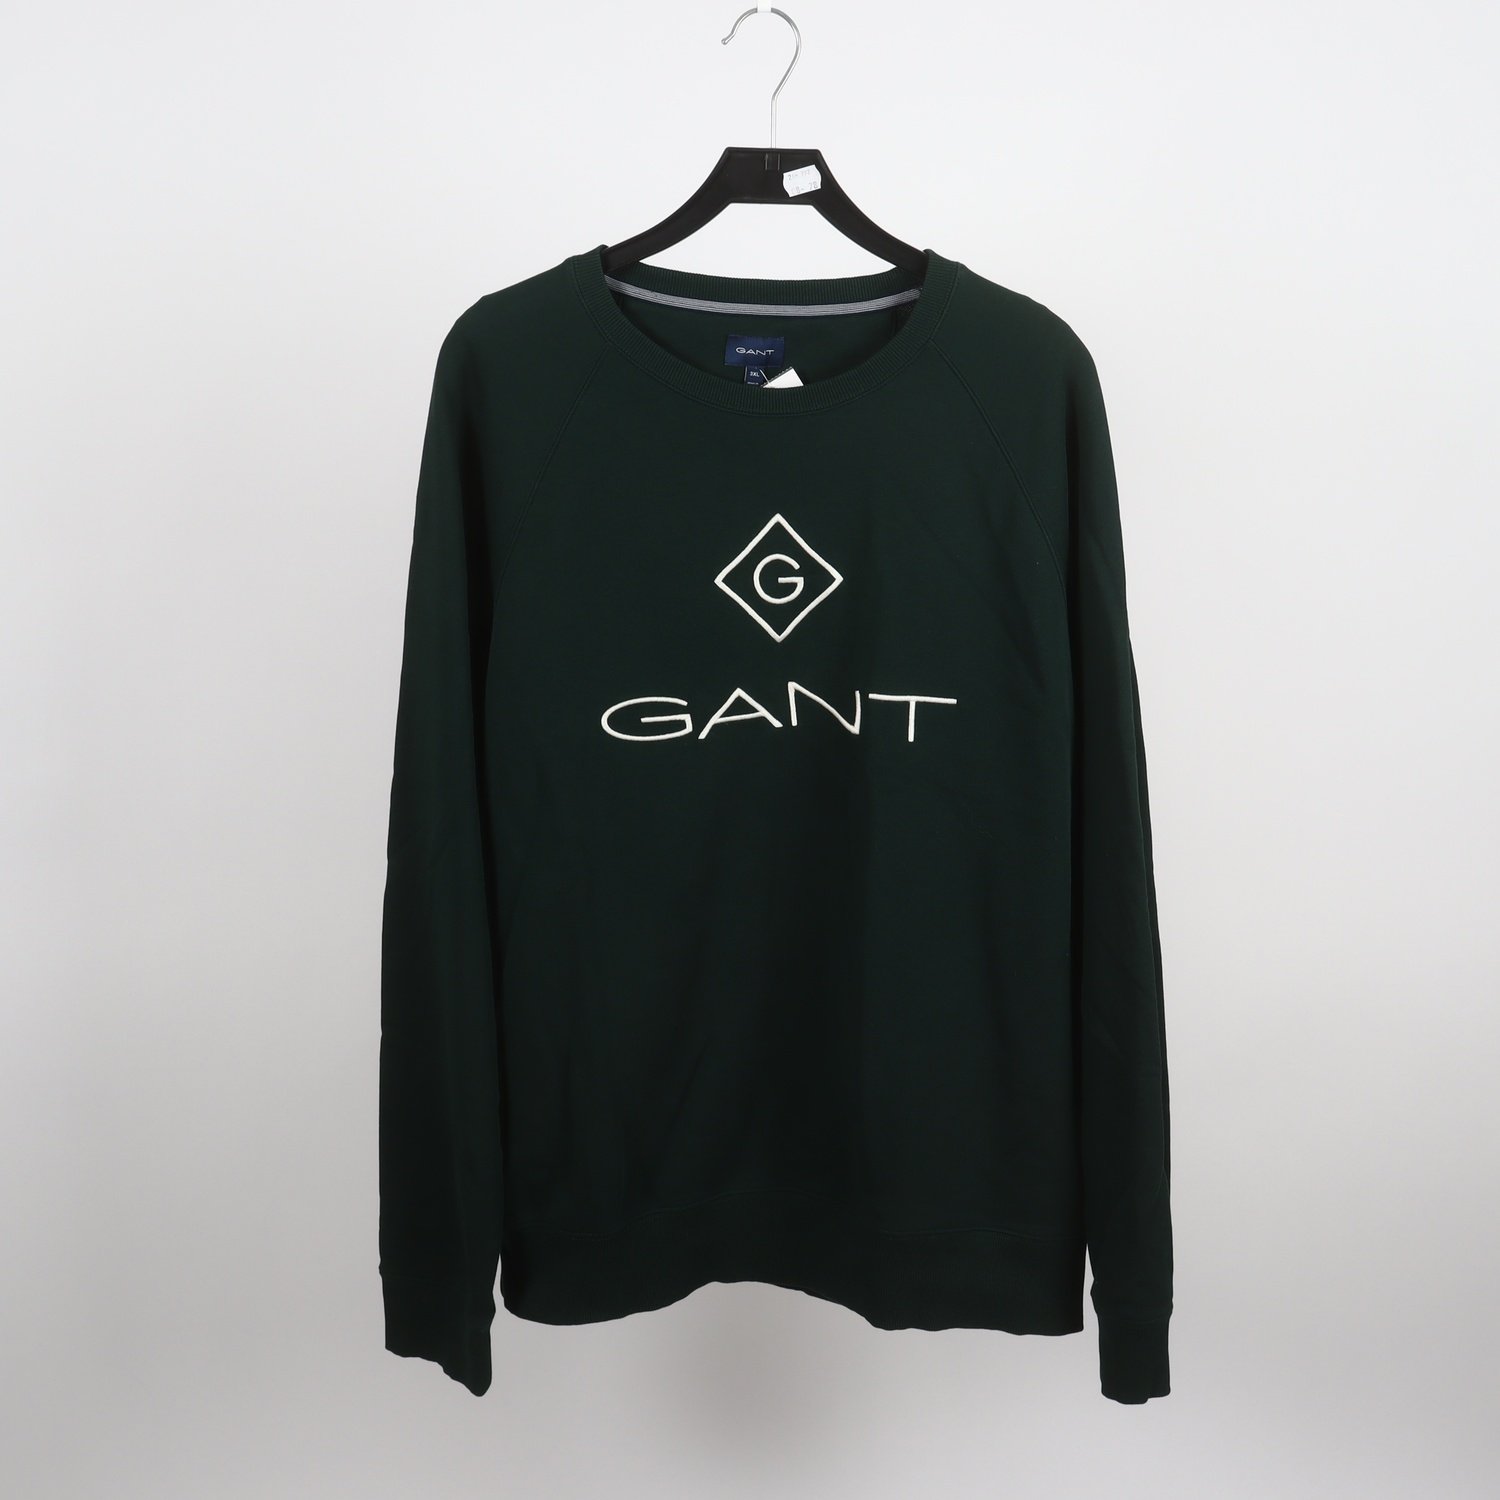 Sweatshirt, Gant, grön, stl. 3XL